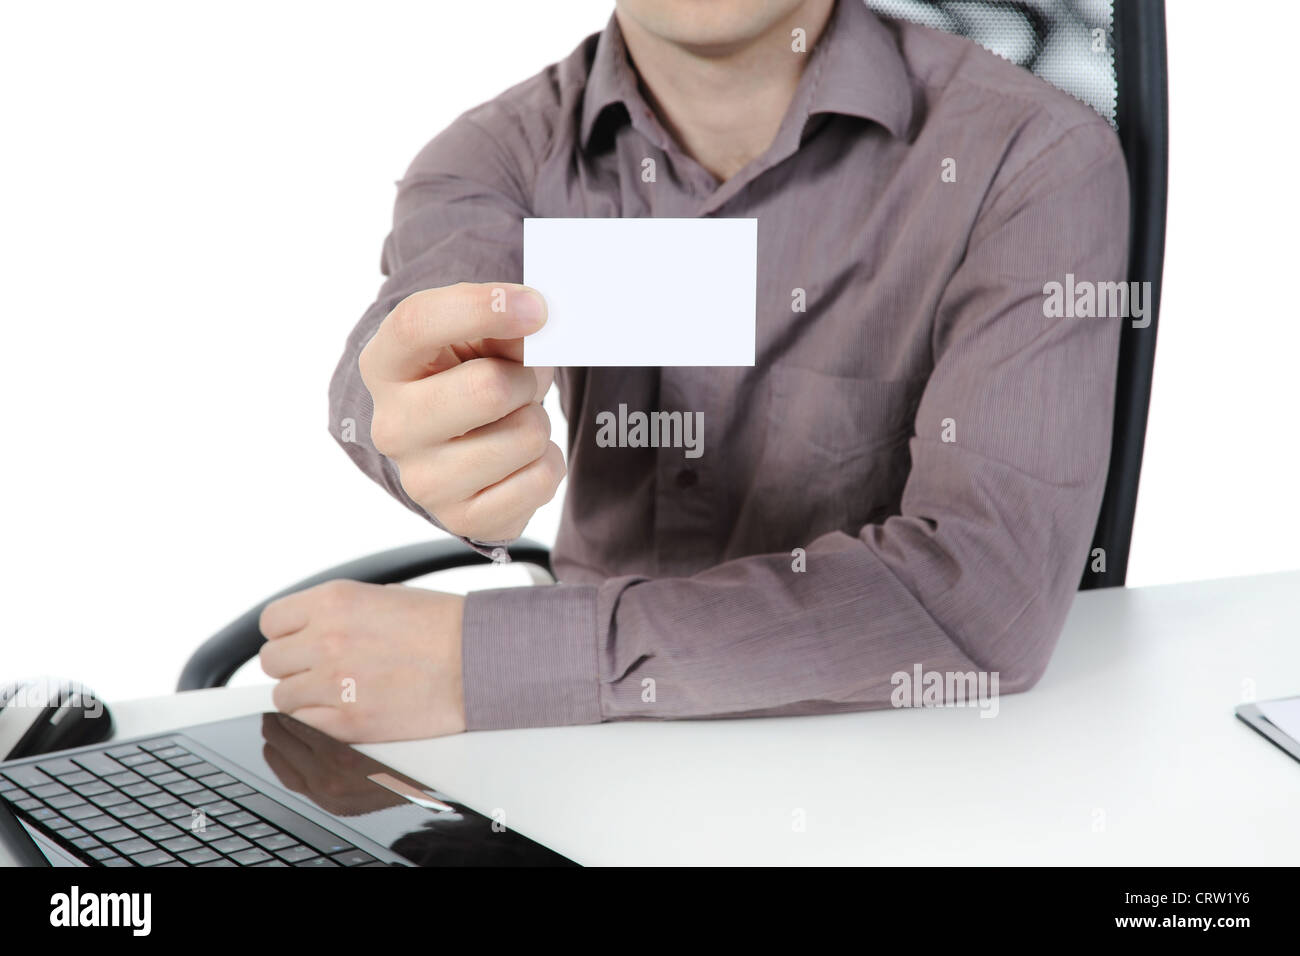 man handing a blank Stock Photo